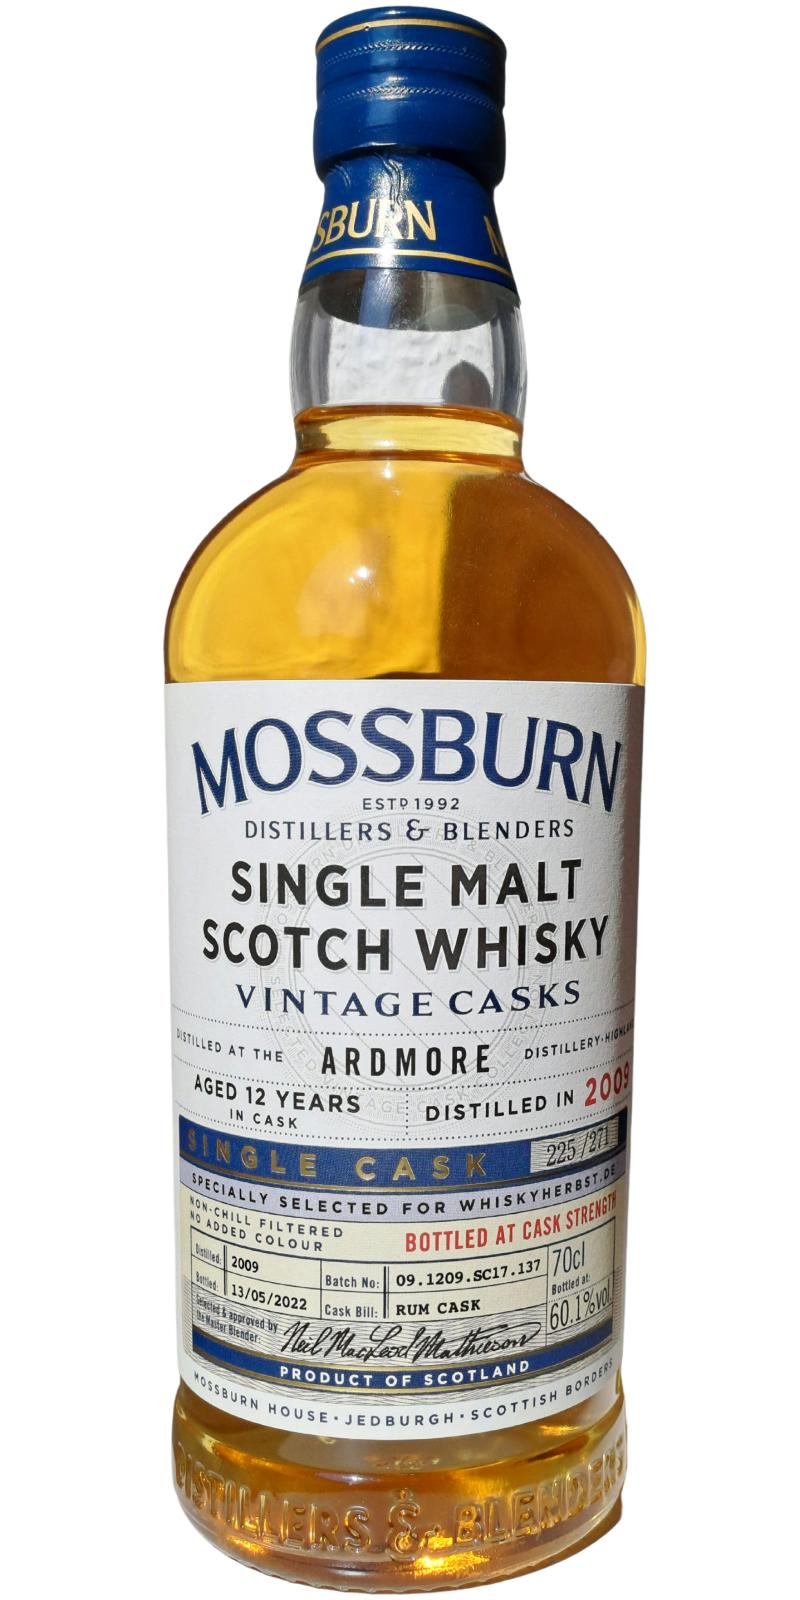 Ardmore 2009 MDB Rum Cask Finish whiskyherbst.de 60.1% 700ml